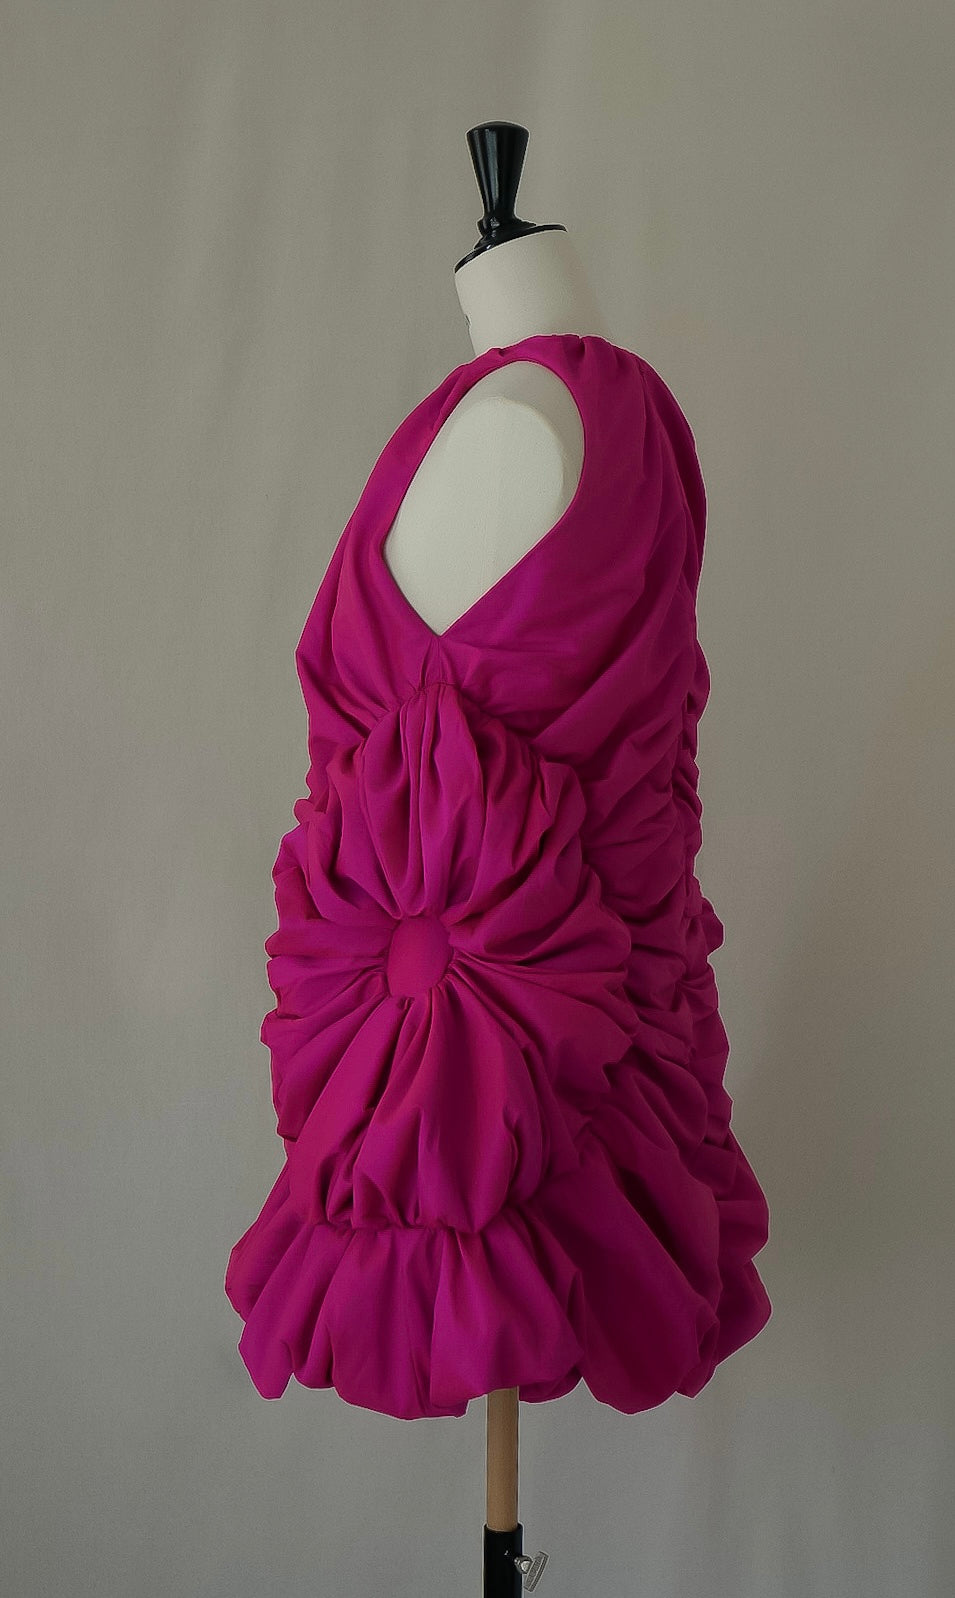 Persephone dress in Pink